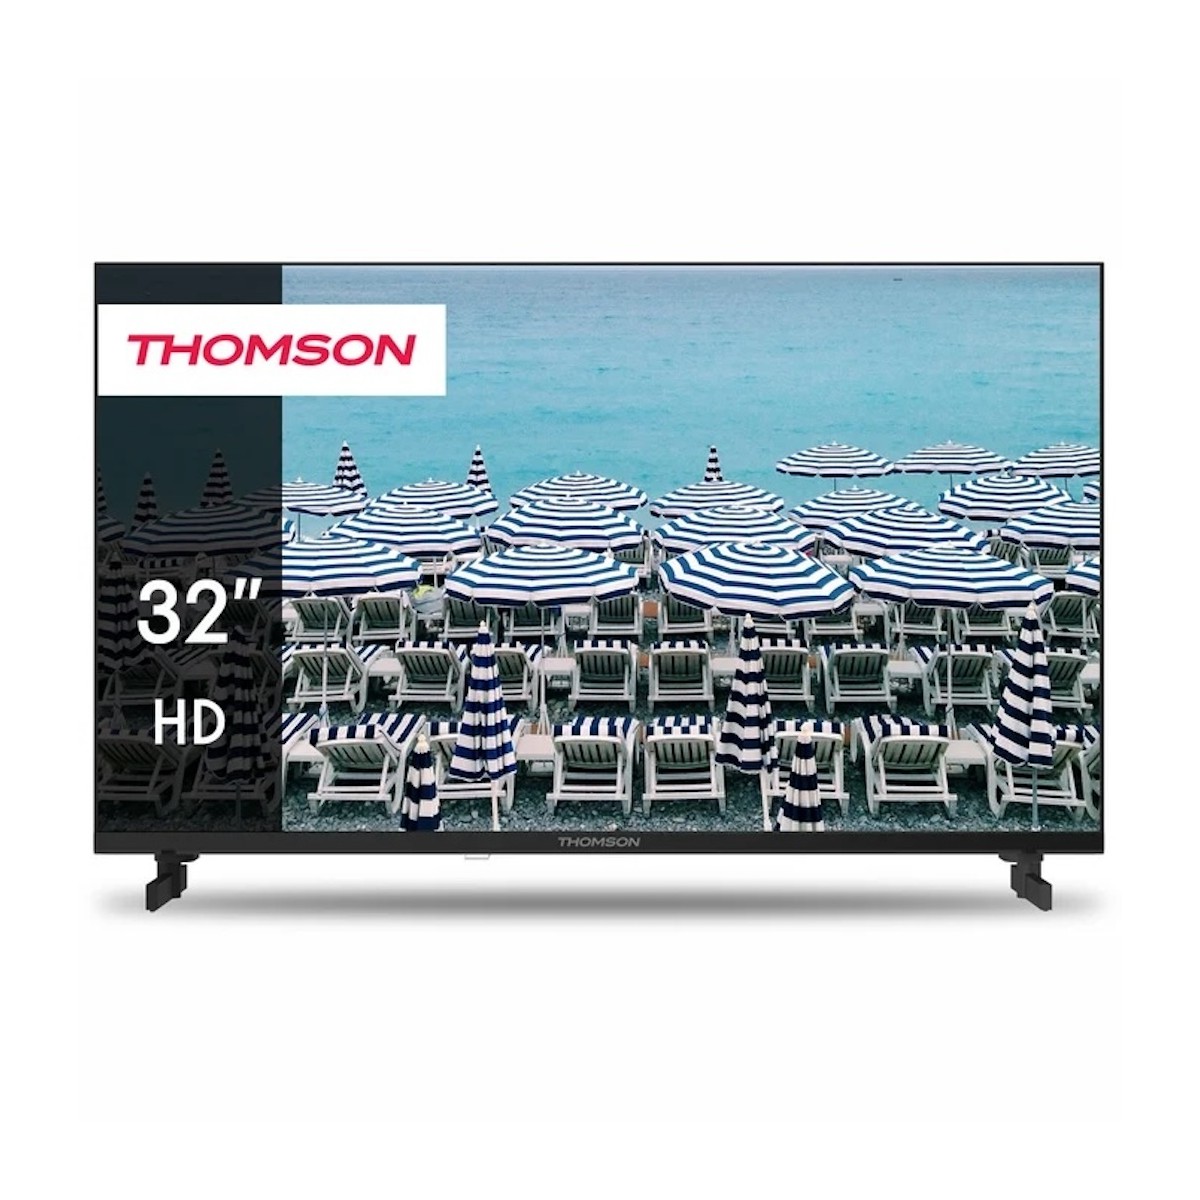 THOMSON EASY 32HD2S13 TV - 32" HD